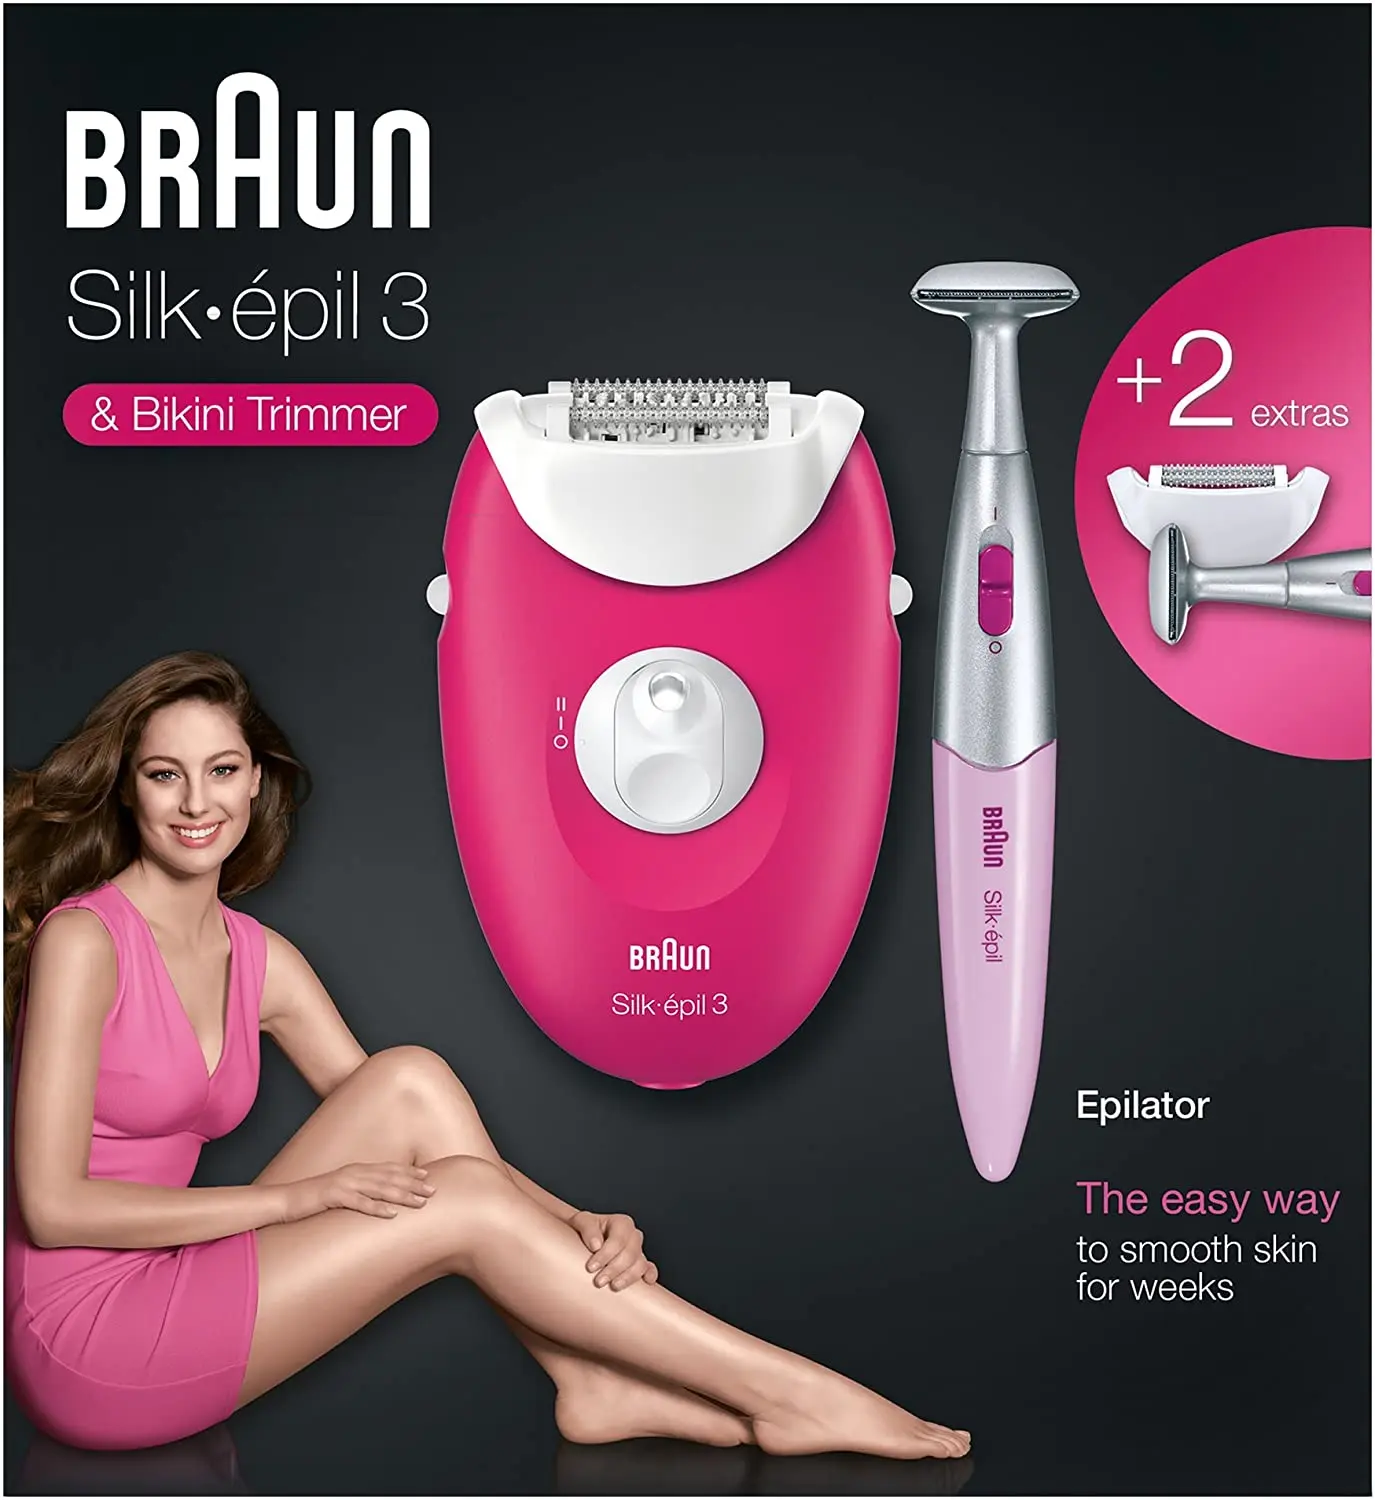 

Braun silk-epil 3 3-420 Wet and Dry Epilator raspberry pink-corded epilator 2 inserts smart feature 2021 model unisex Epilator